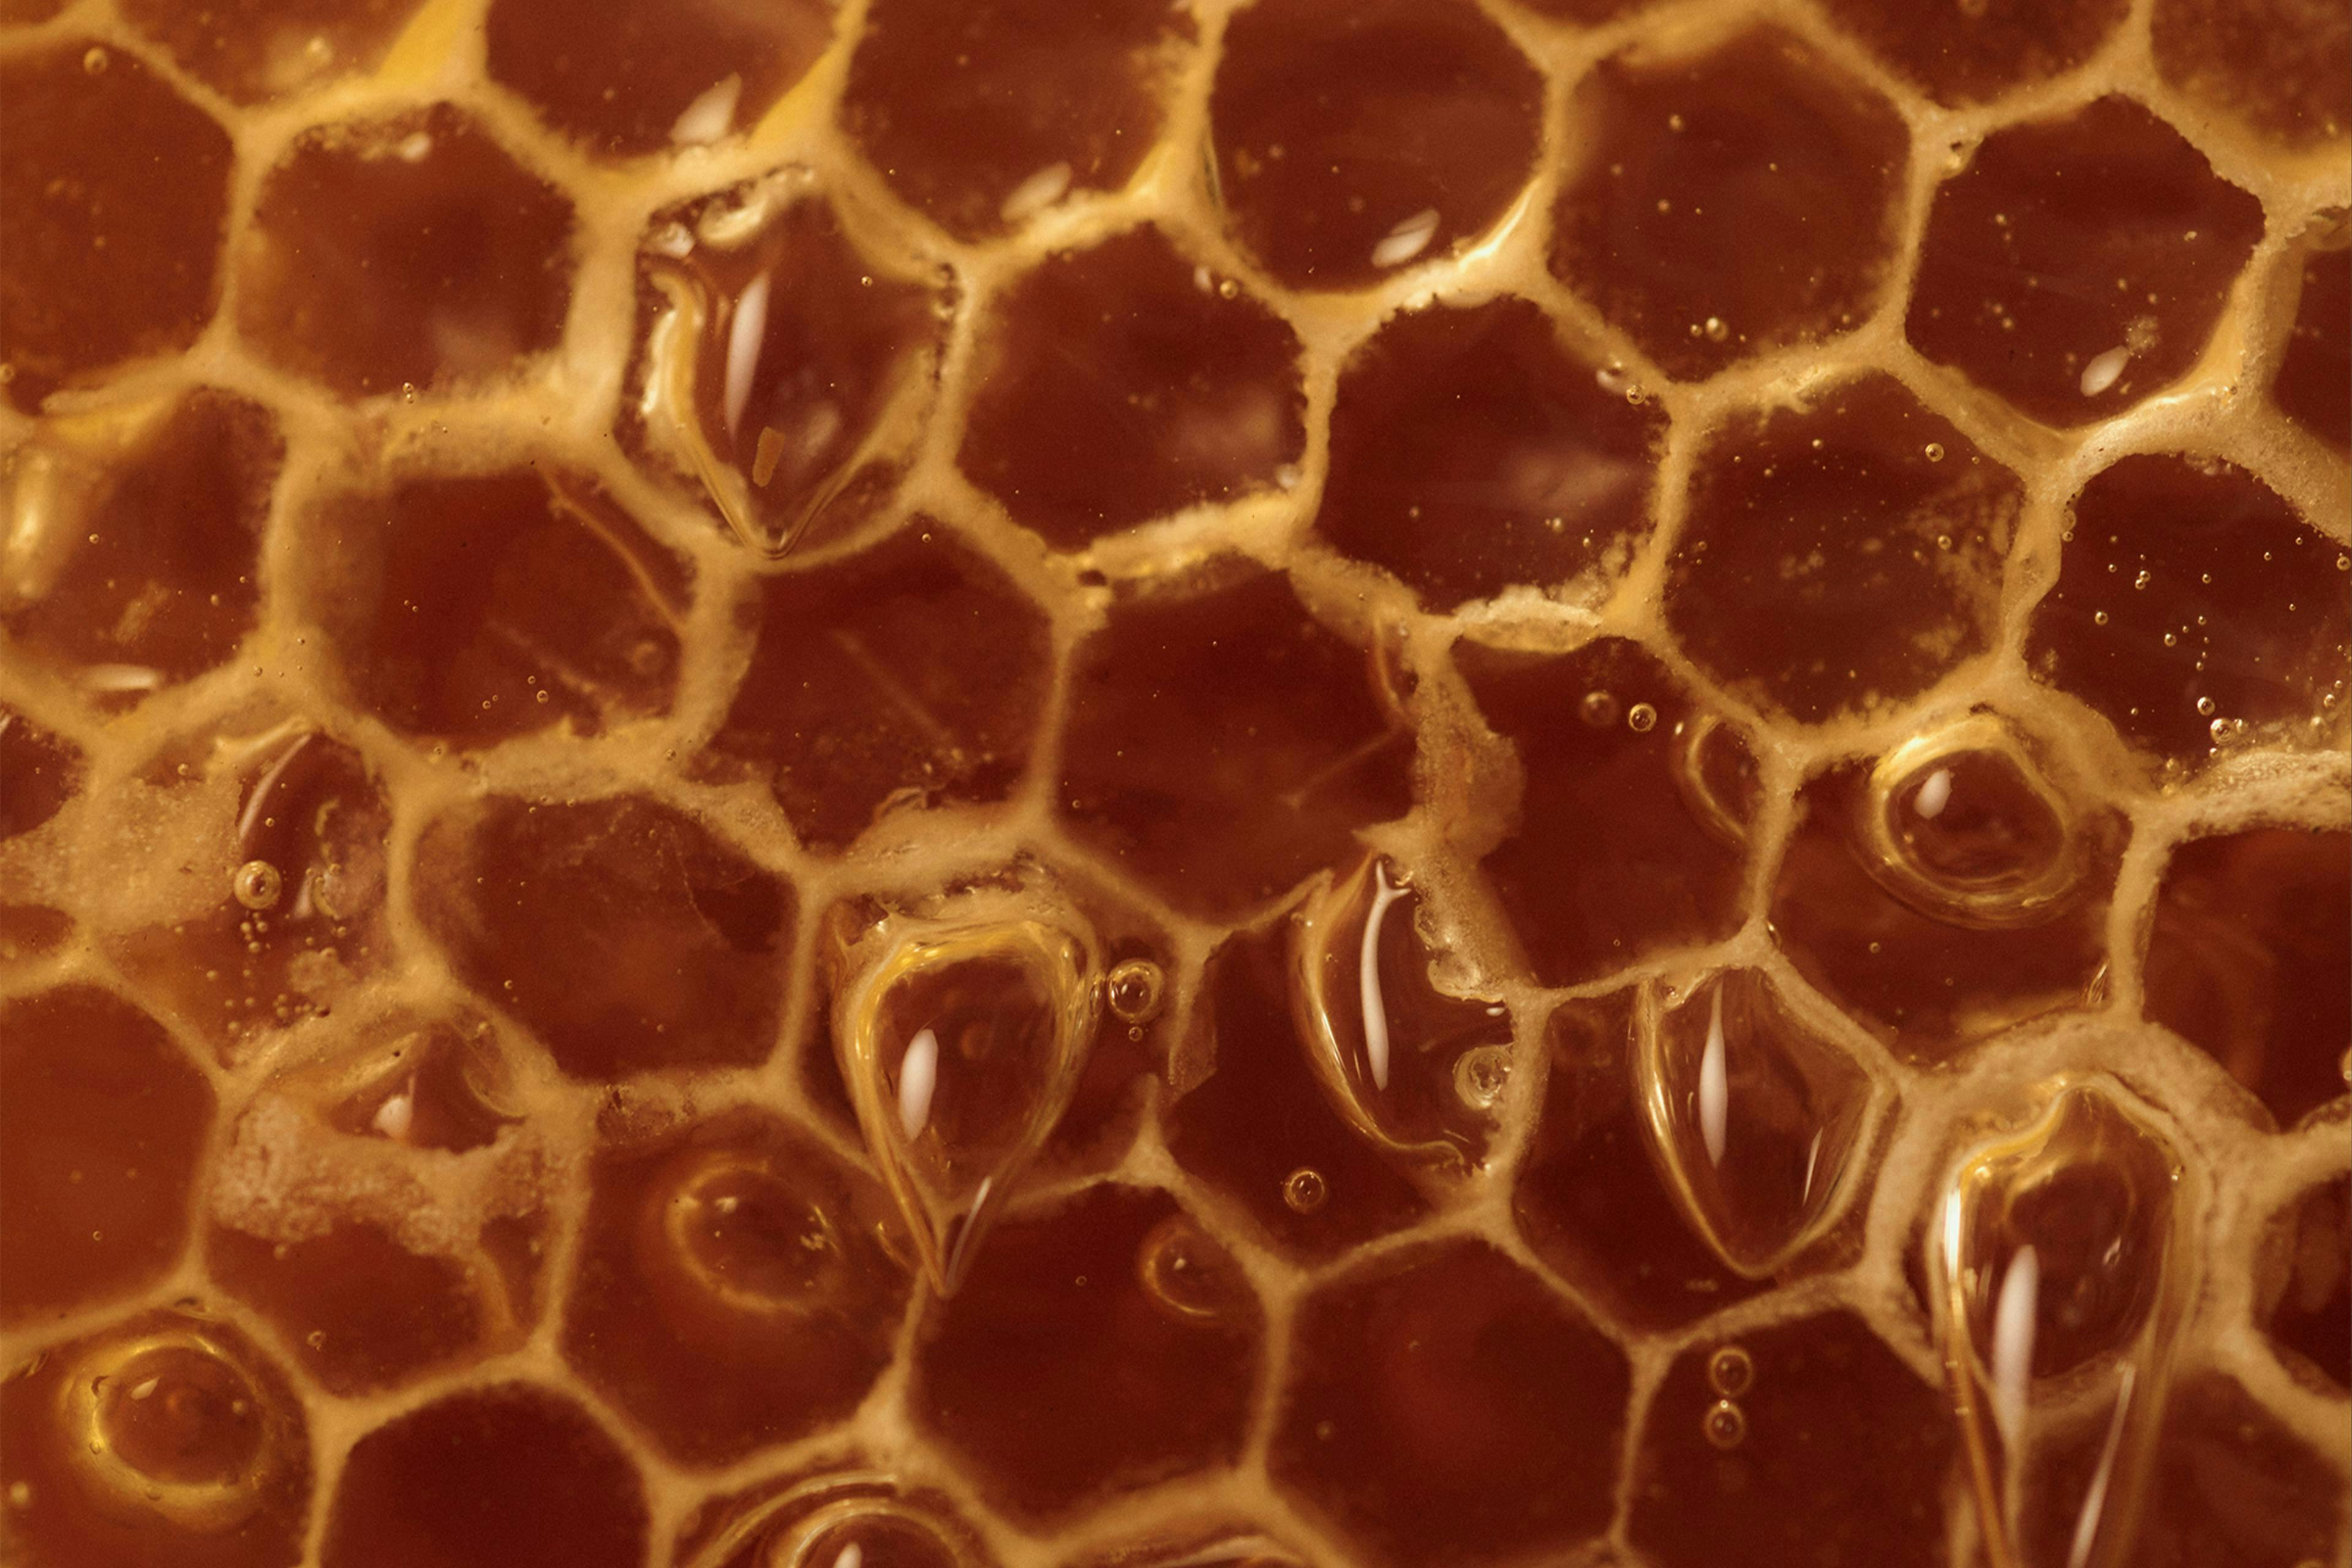 mycro adaptogenic mushroom honey superfoods